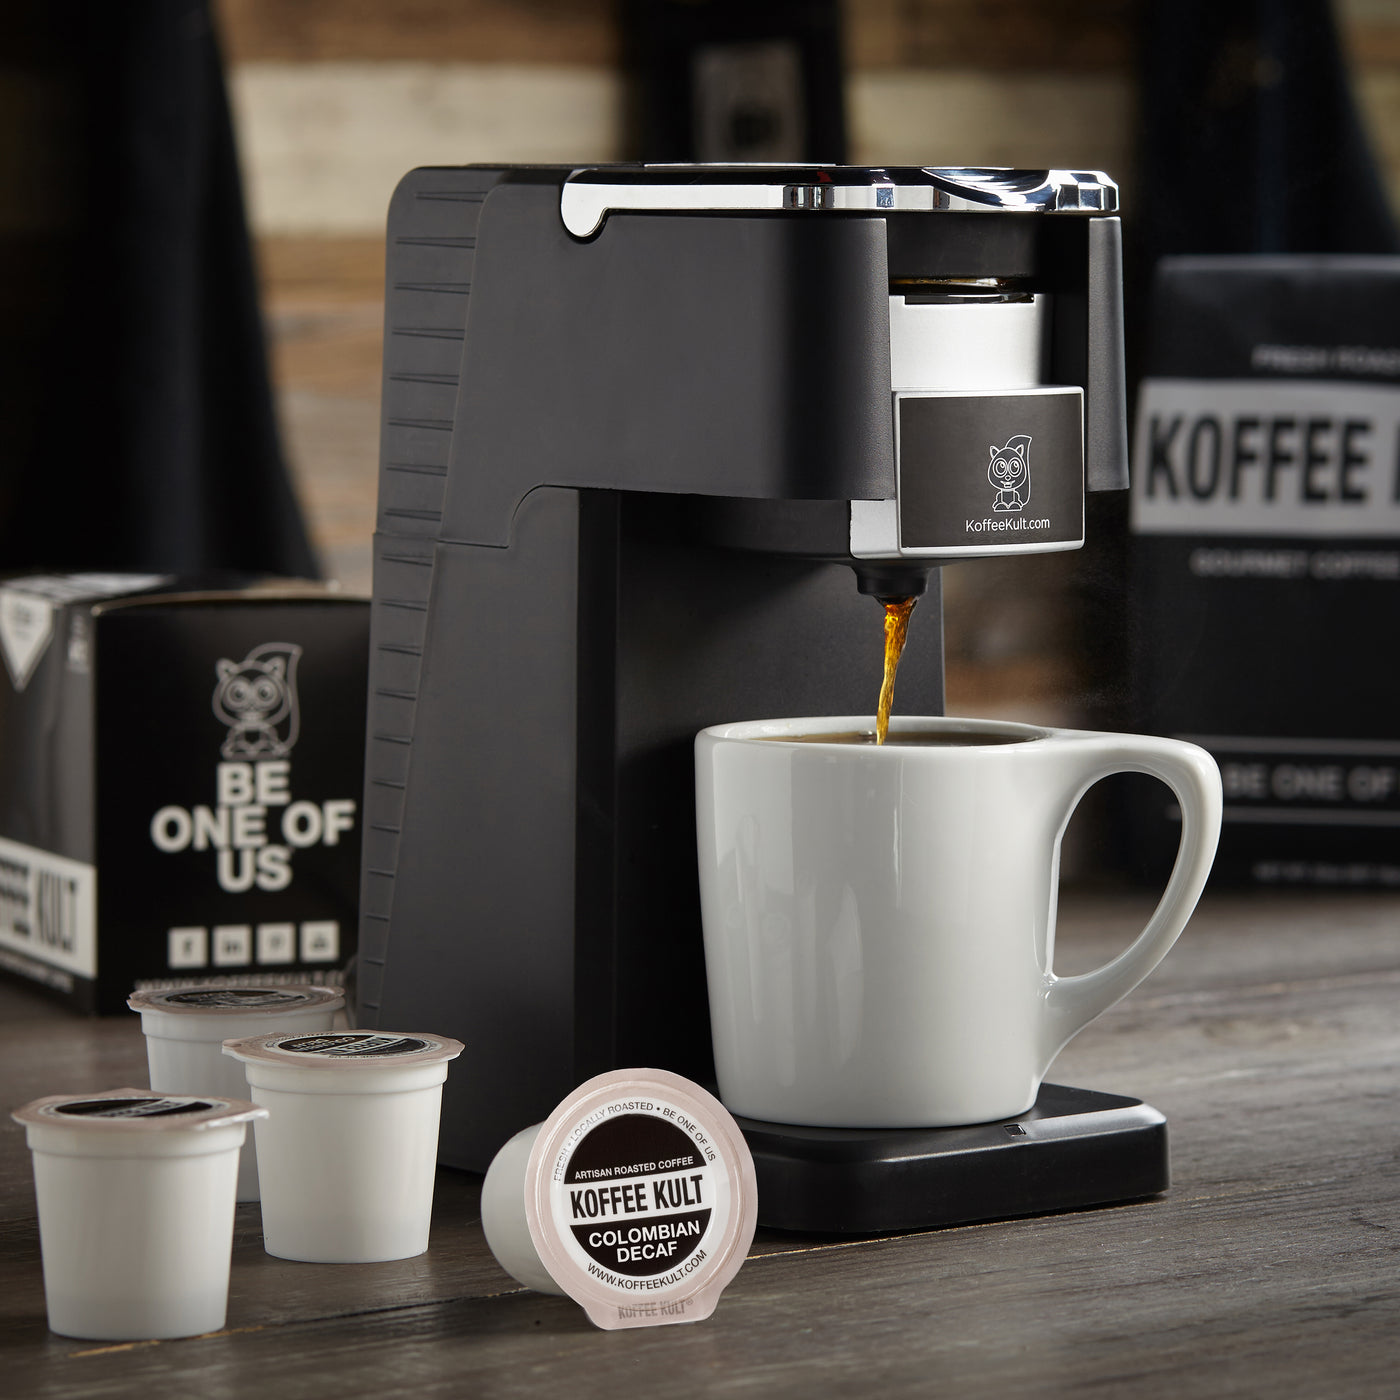 Original Koffee Kult Colombia Decaf coffee in single serve cups